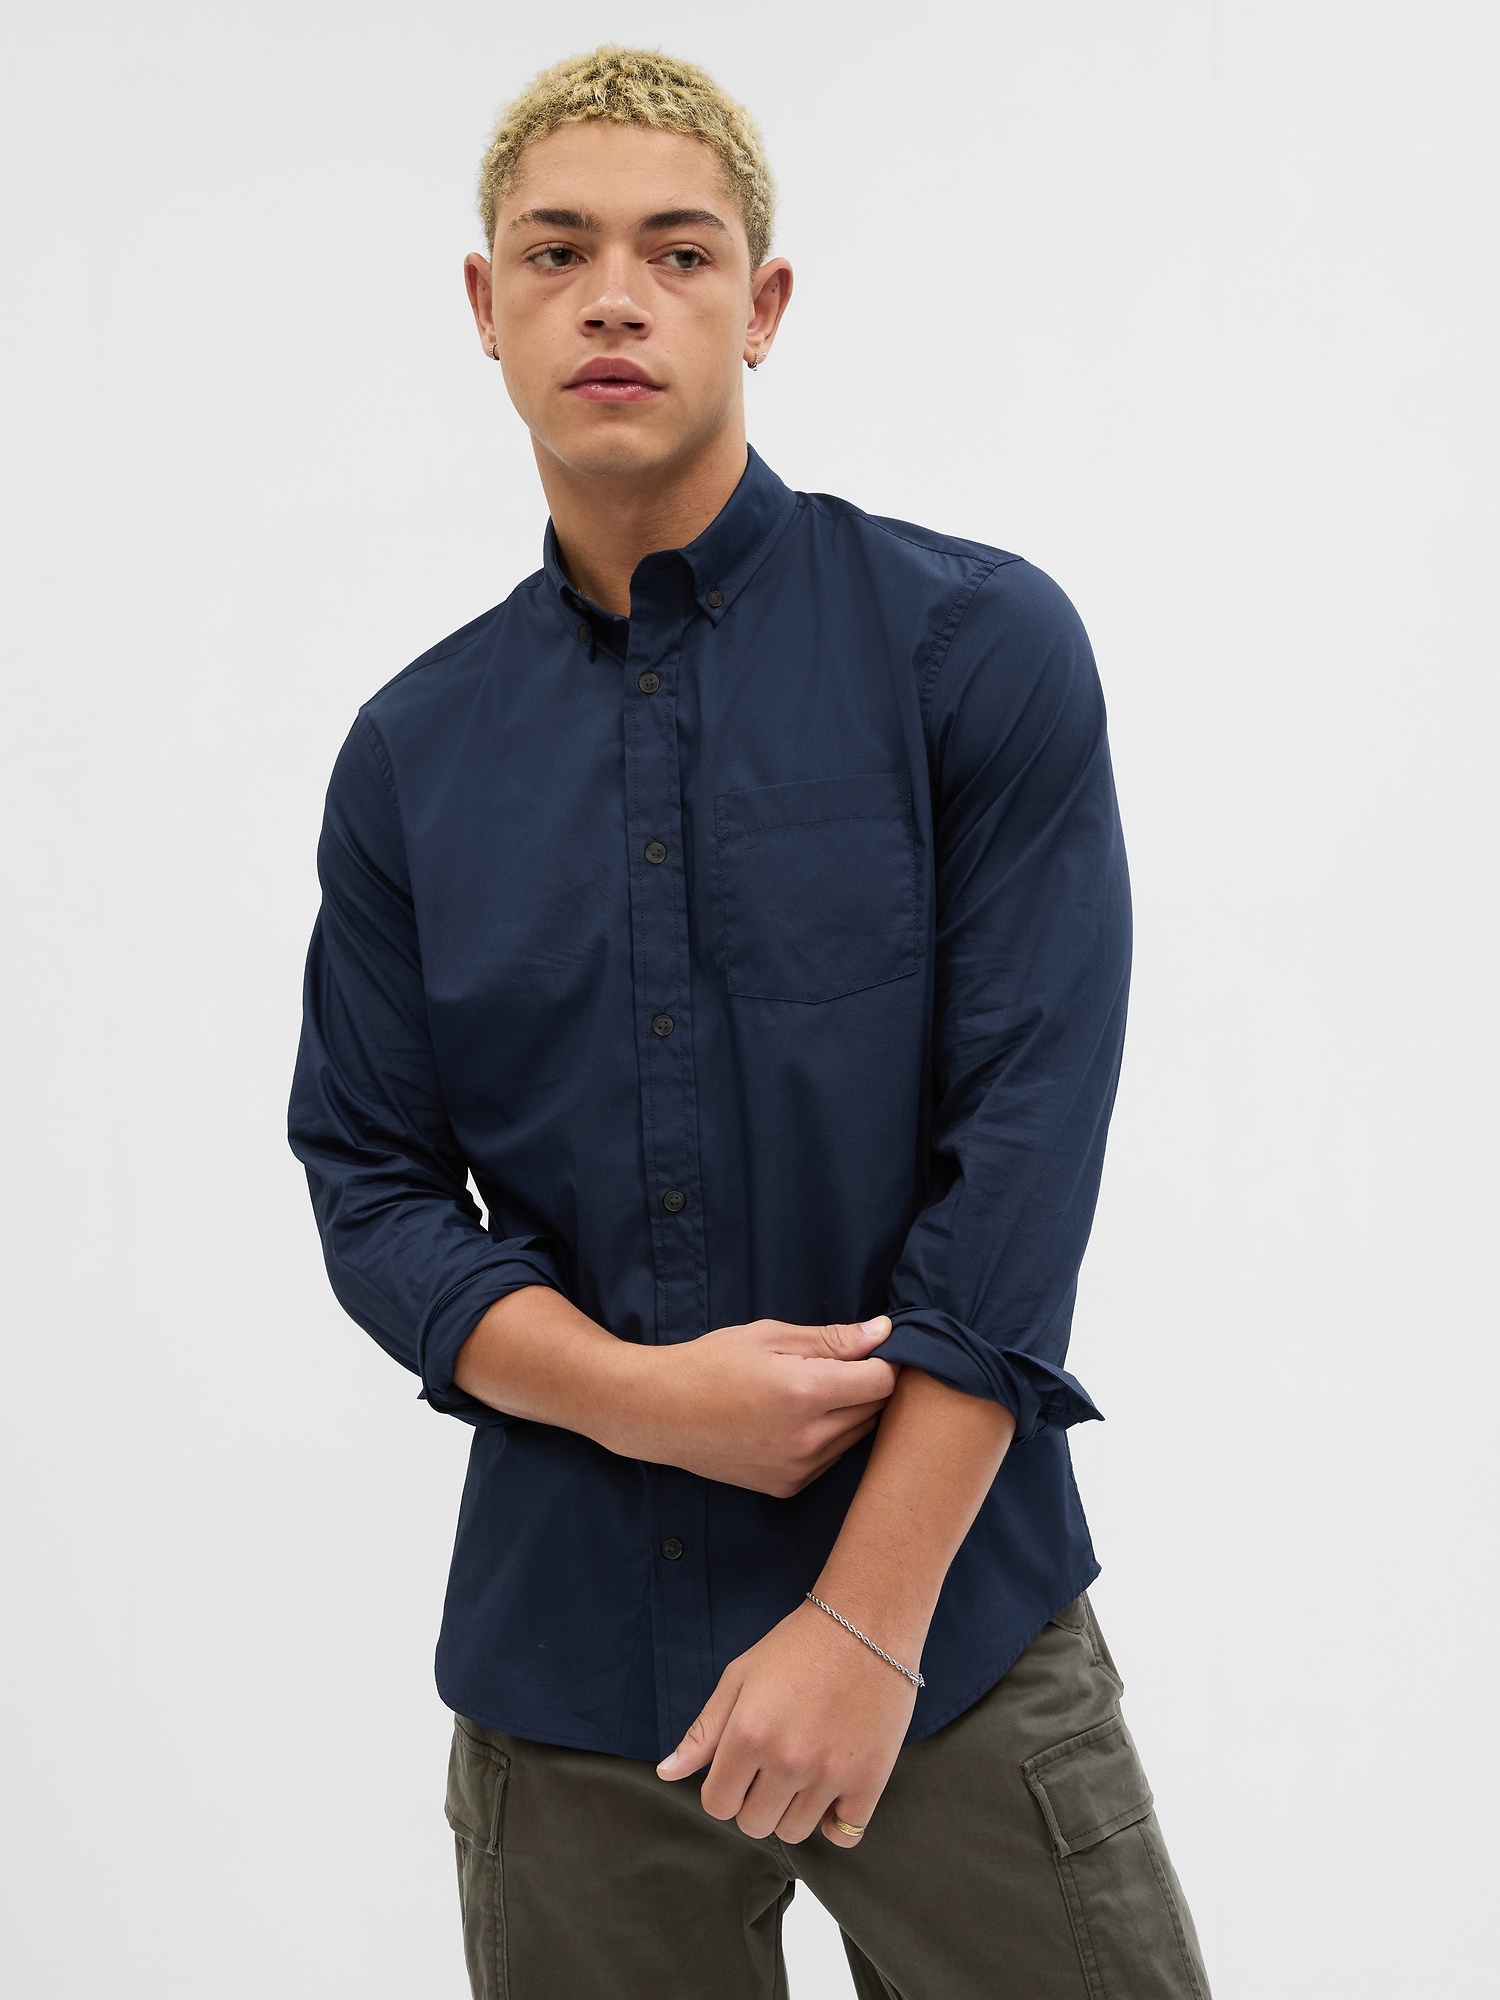 Essentials Men's Regular-fit Long-Sleeve Chambray Shirt Blue Size  Small